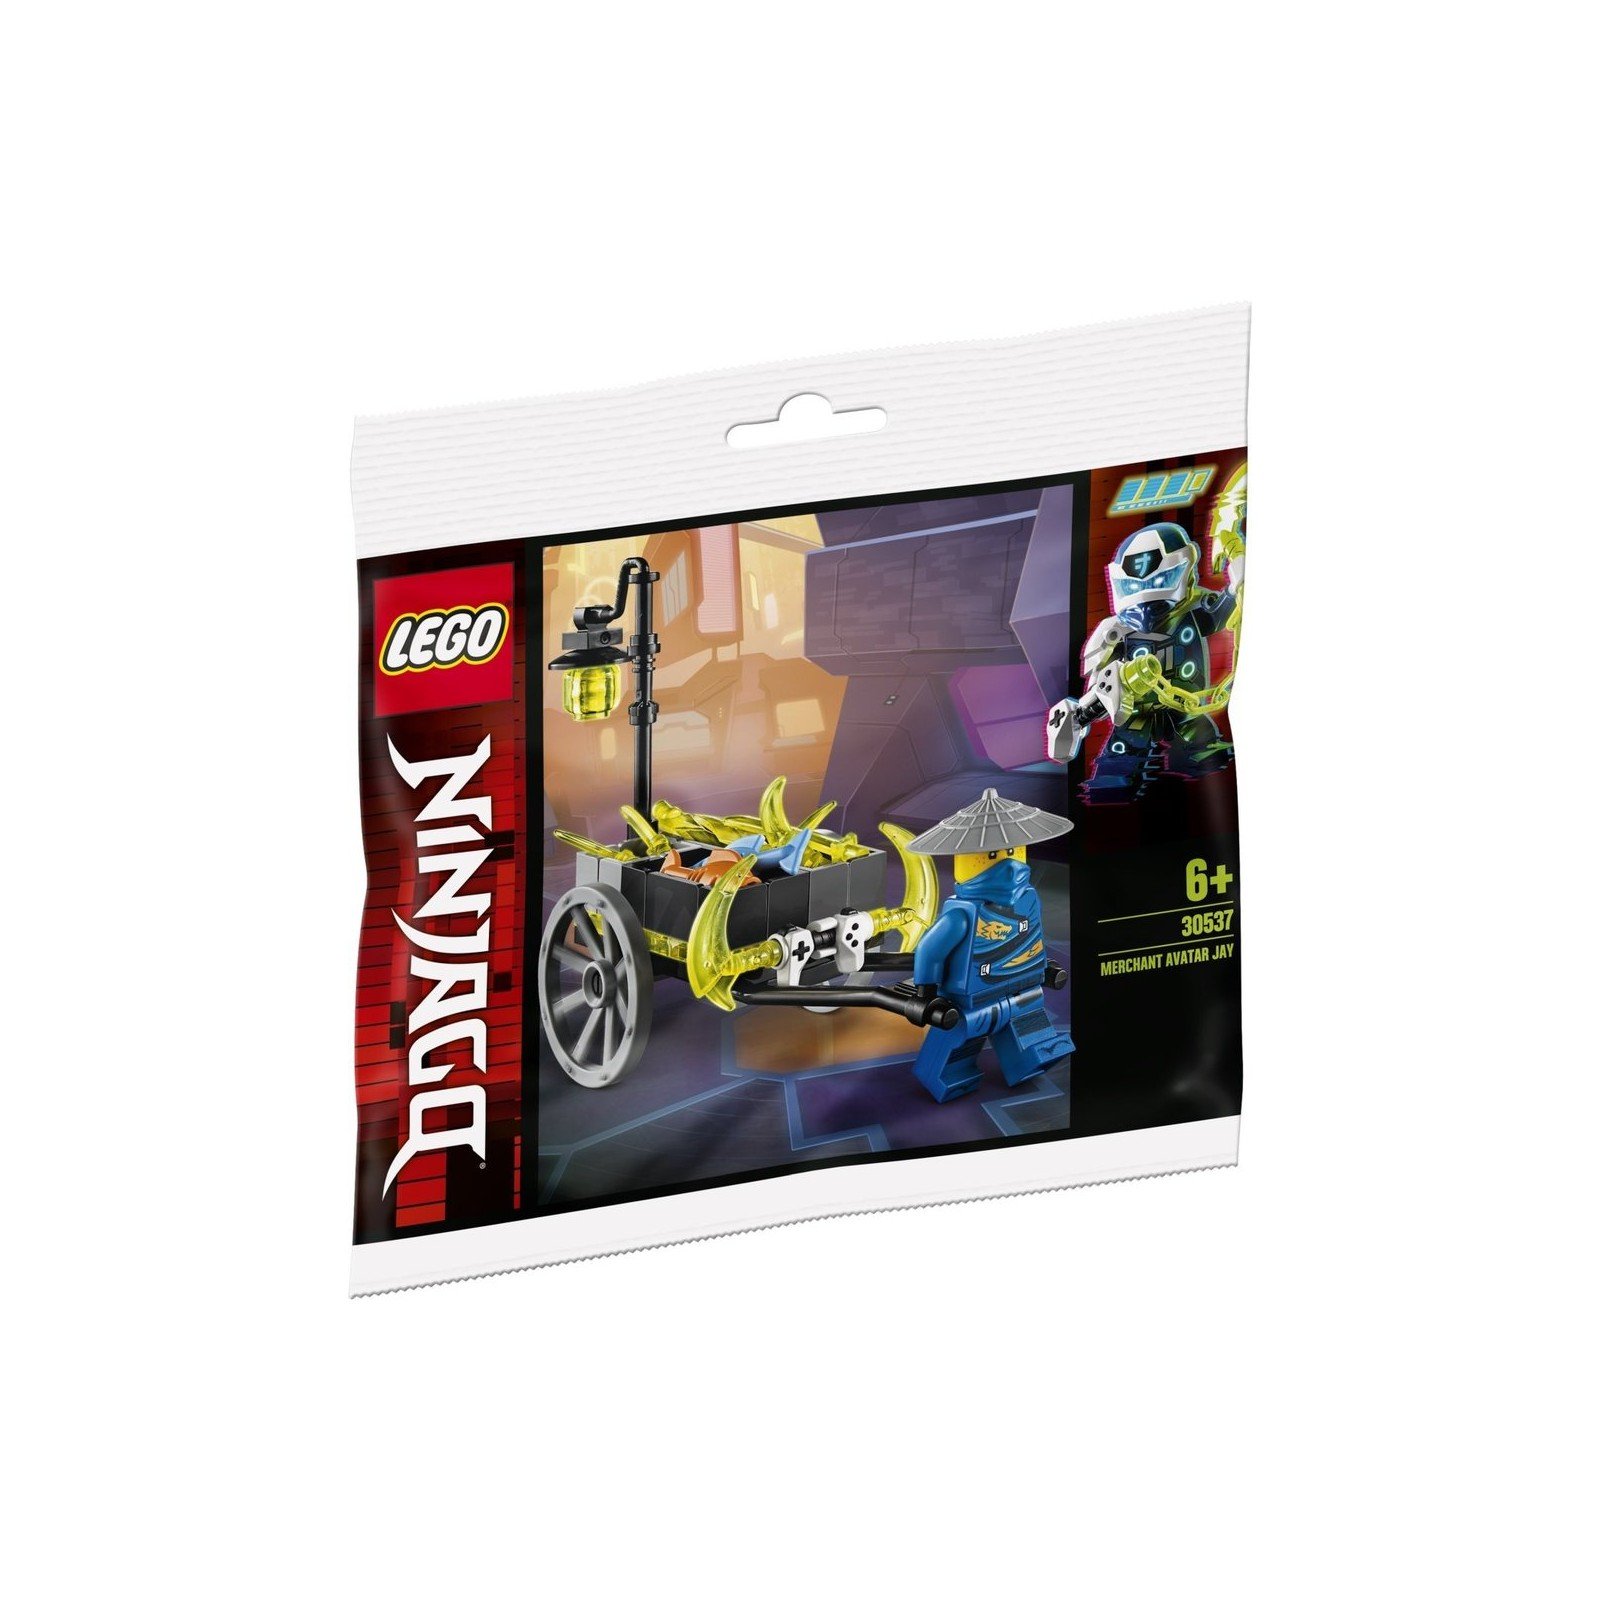 Merchant Avatar Jay - Polybag LEGO® Ninjago 30537